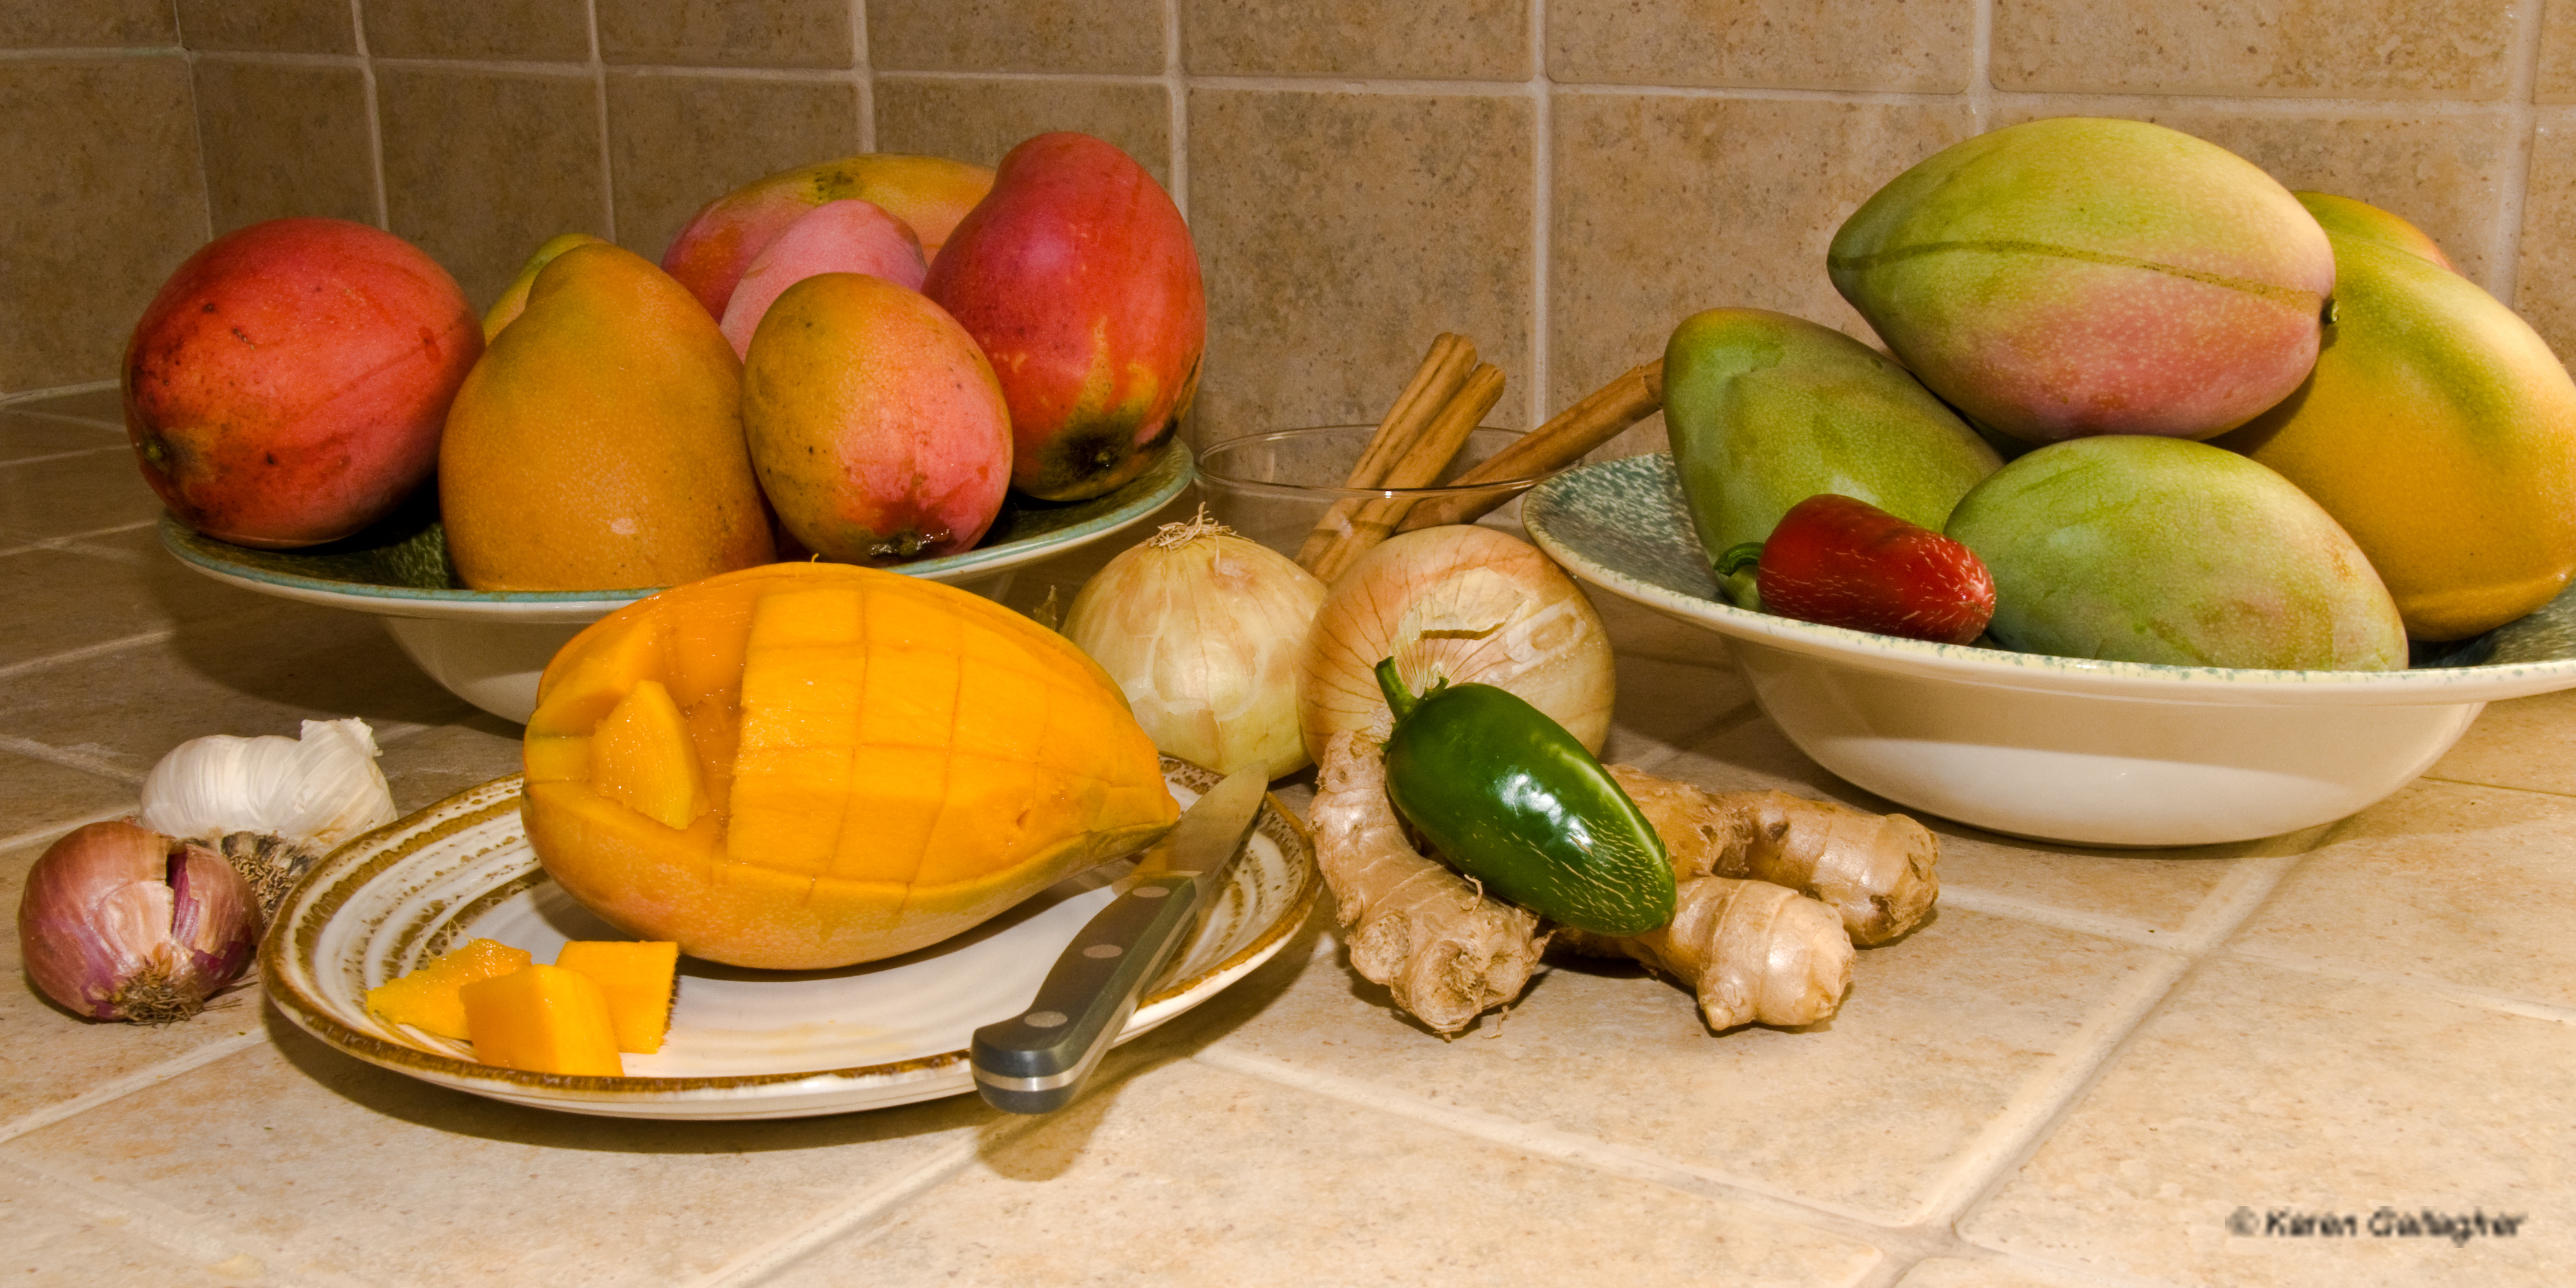 mango壁紙,食物,自然食品,フルーツ,工場,マンゴー